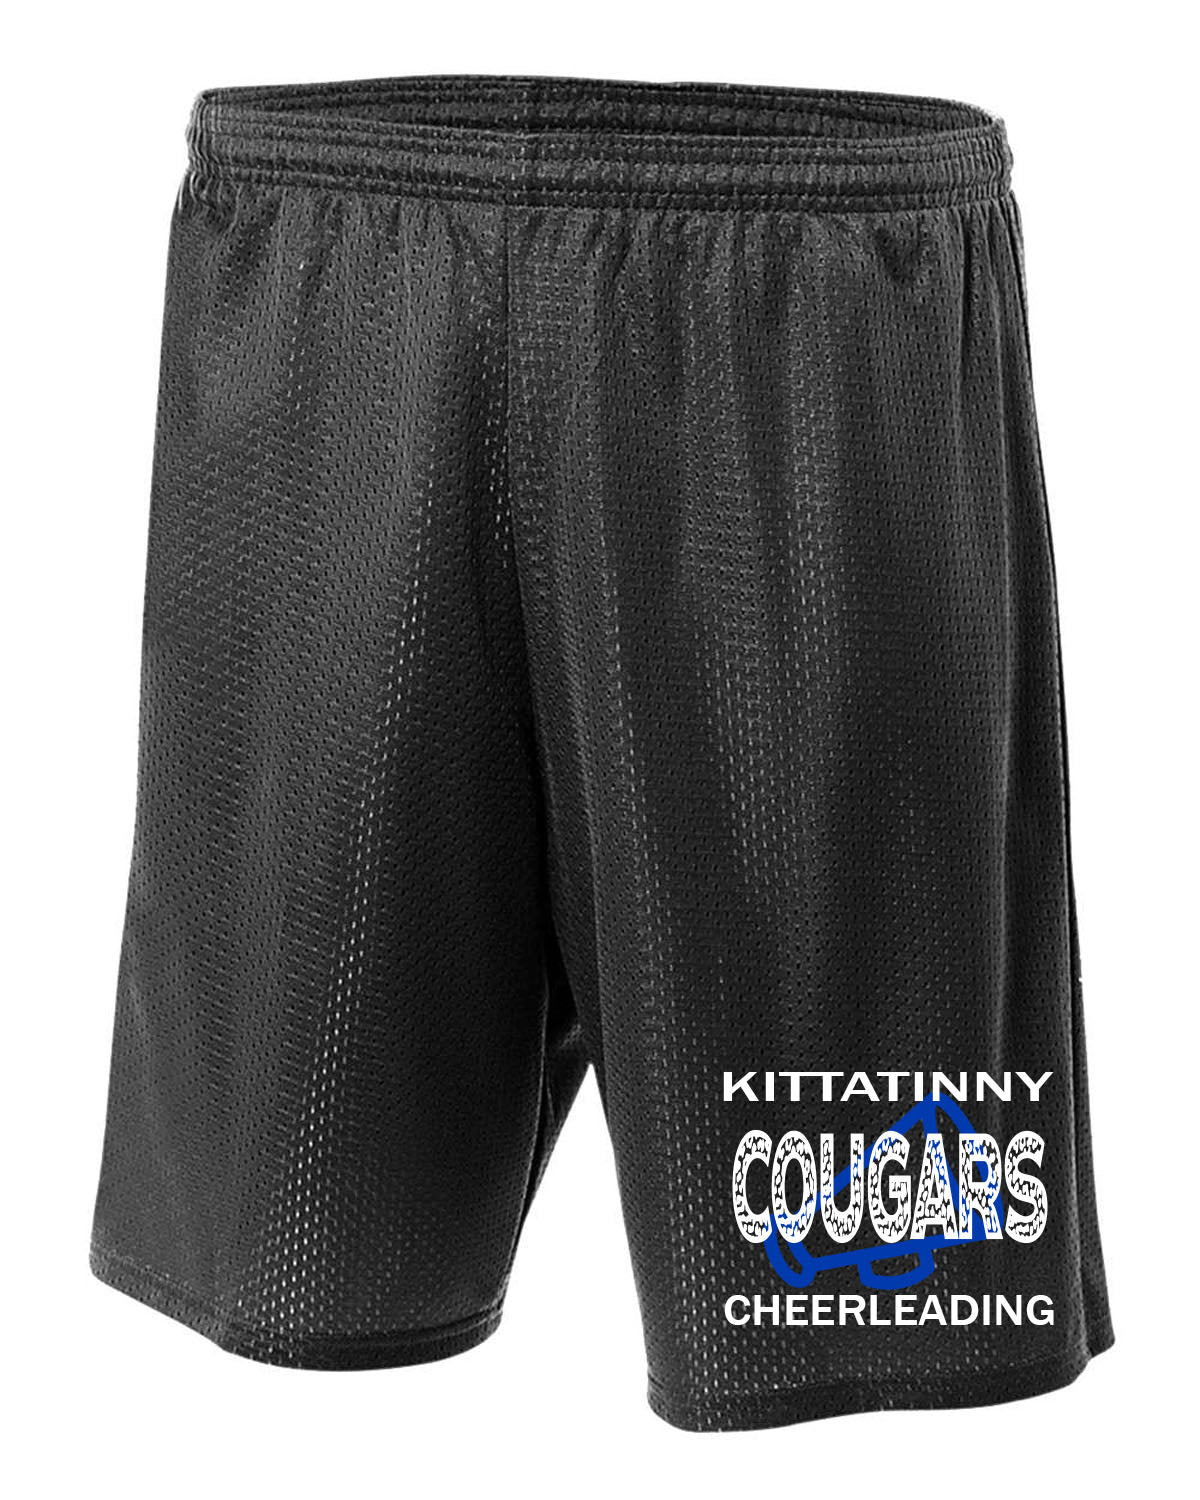 Kittatinny Cheer Design 10 Mesh Shorts